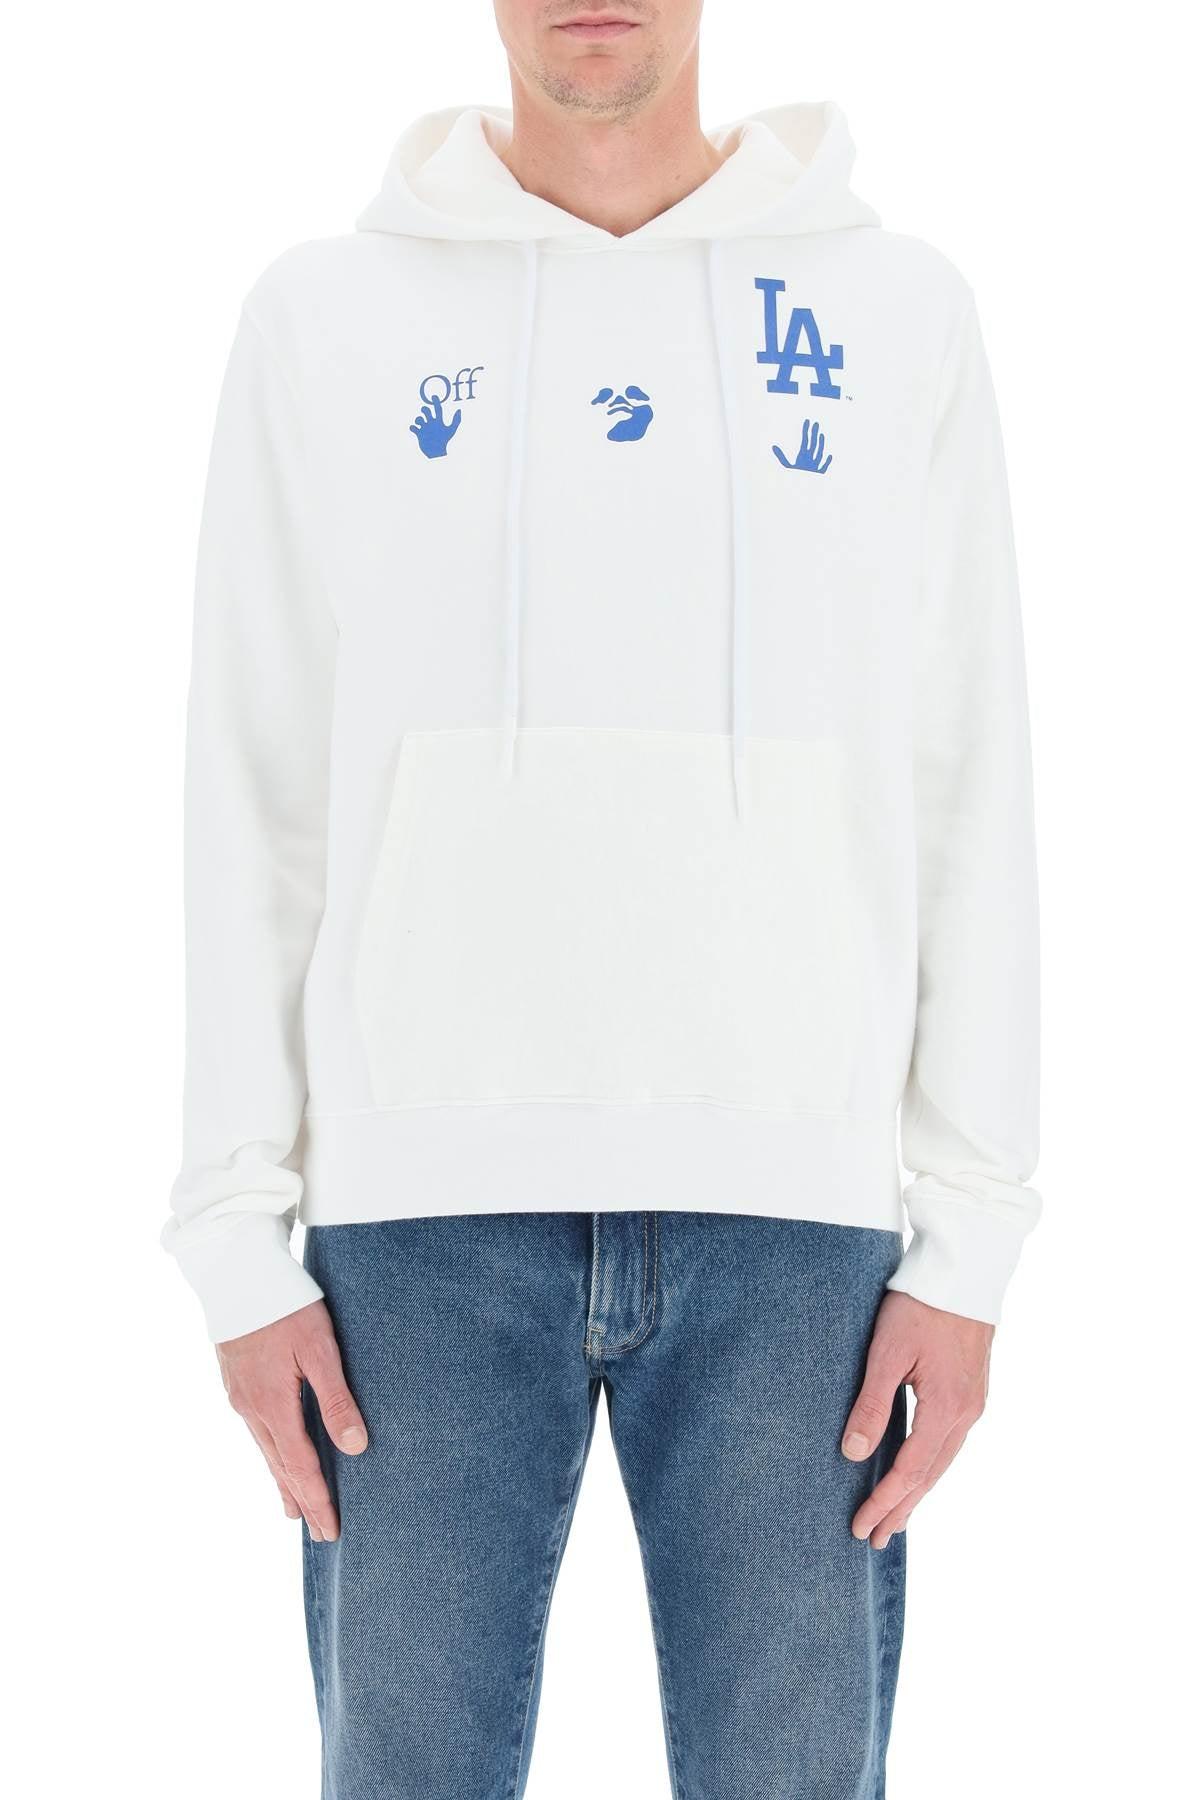 Dia de Los Angeles Dodgers hippie car shirt, hoodie, sweater and v